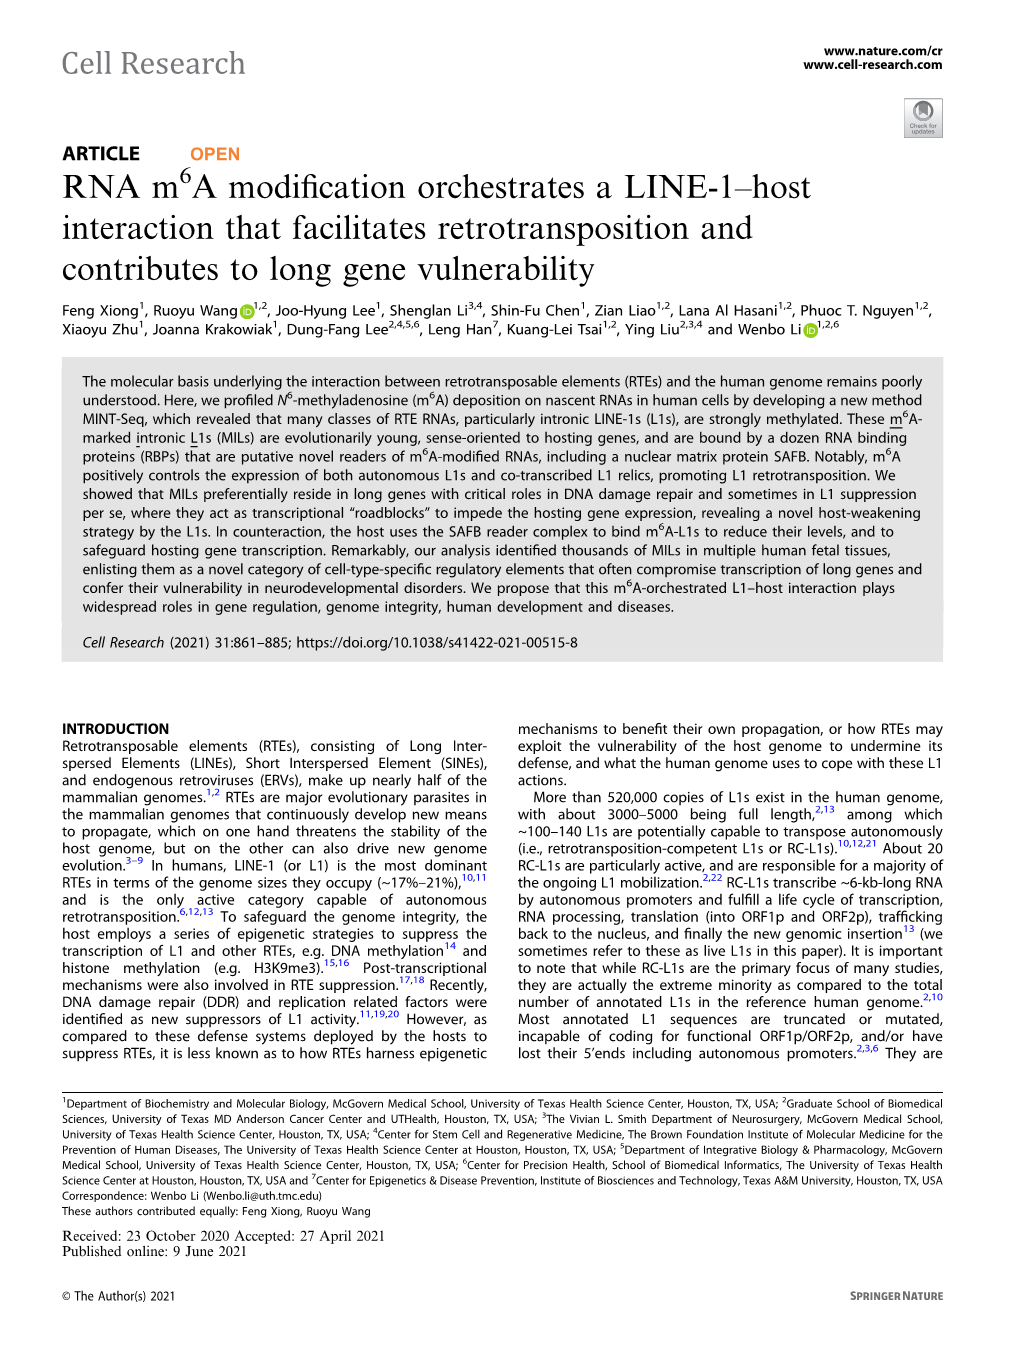 RNA M6a Modification Orchestrates a LINE-1Â